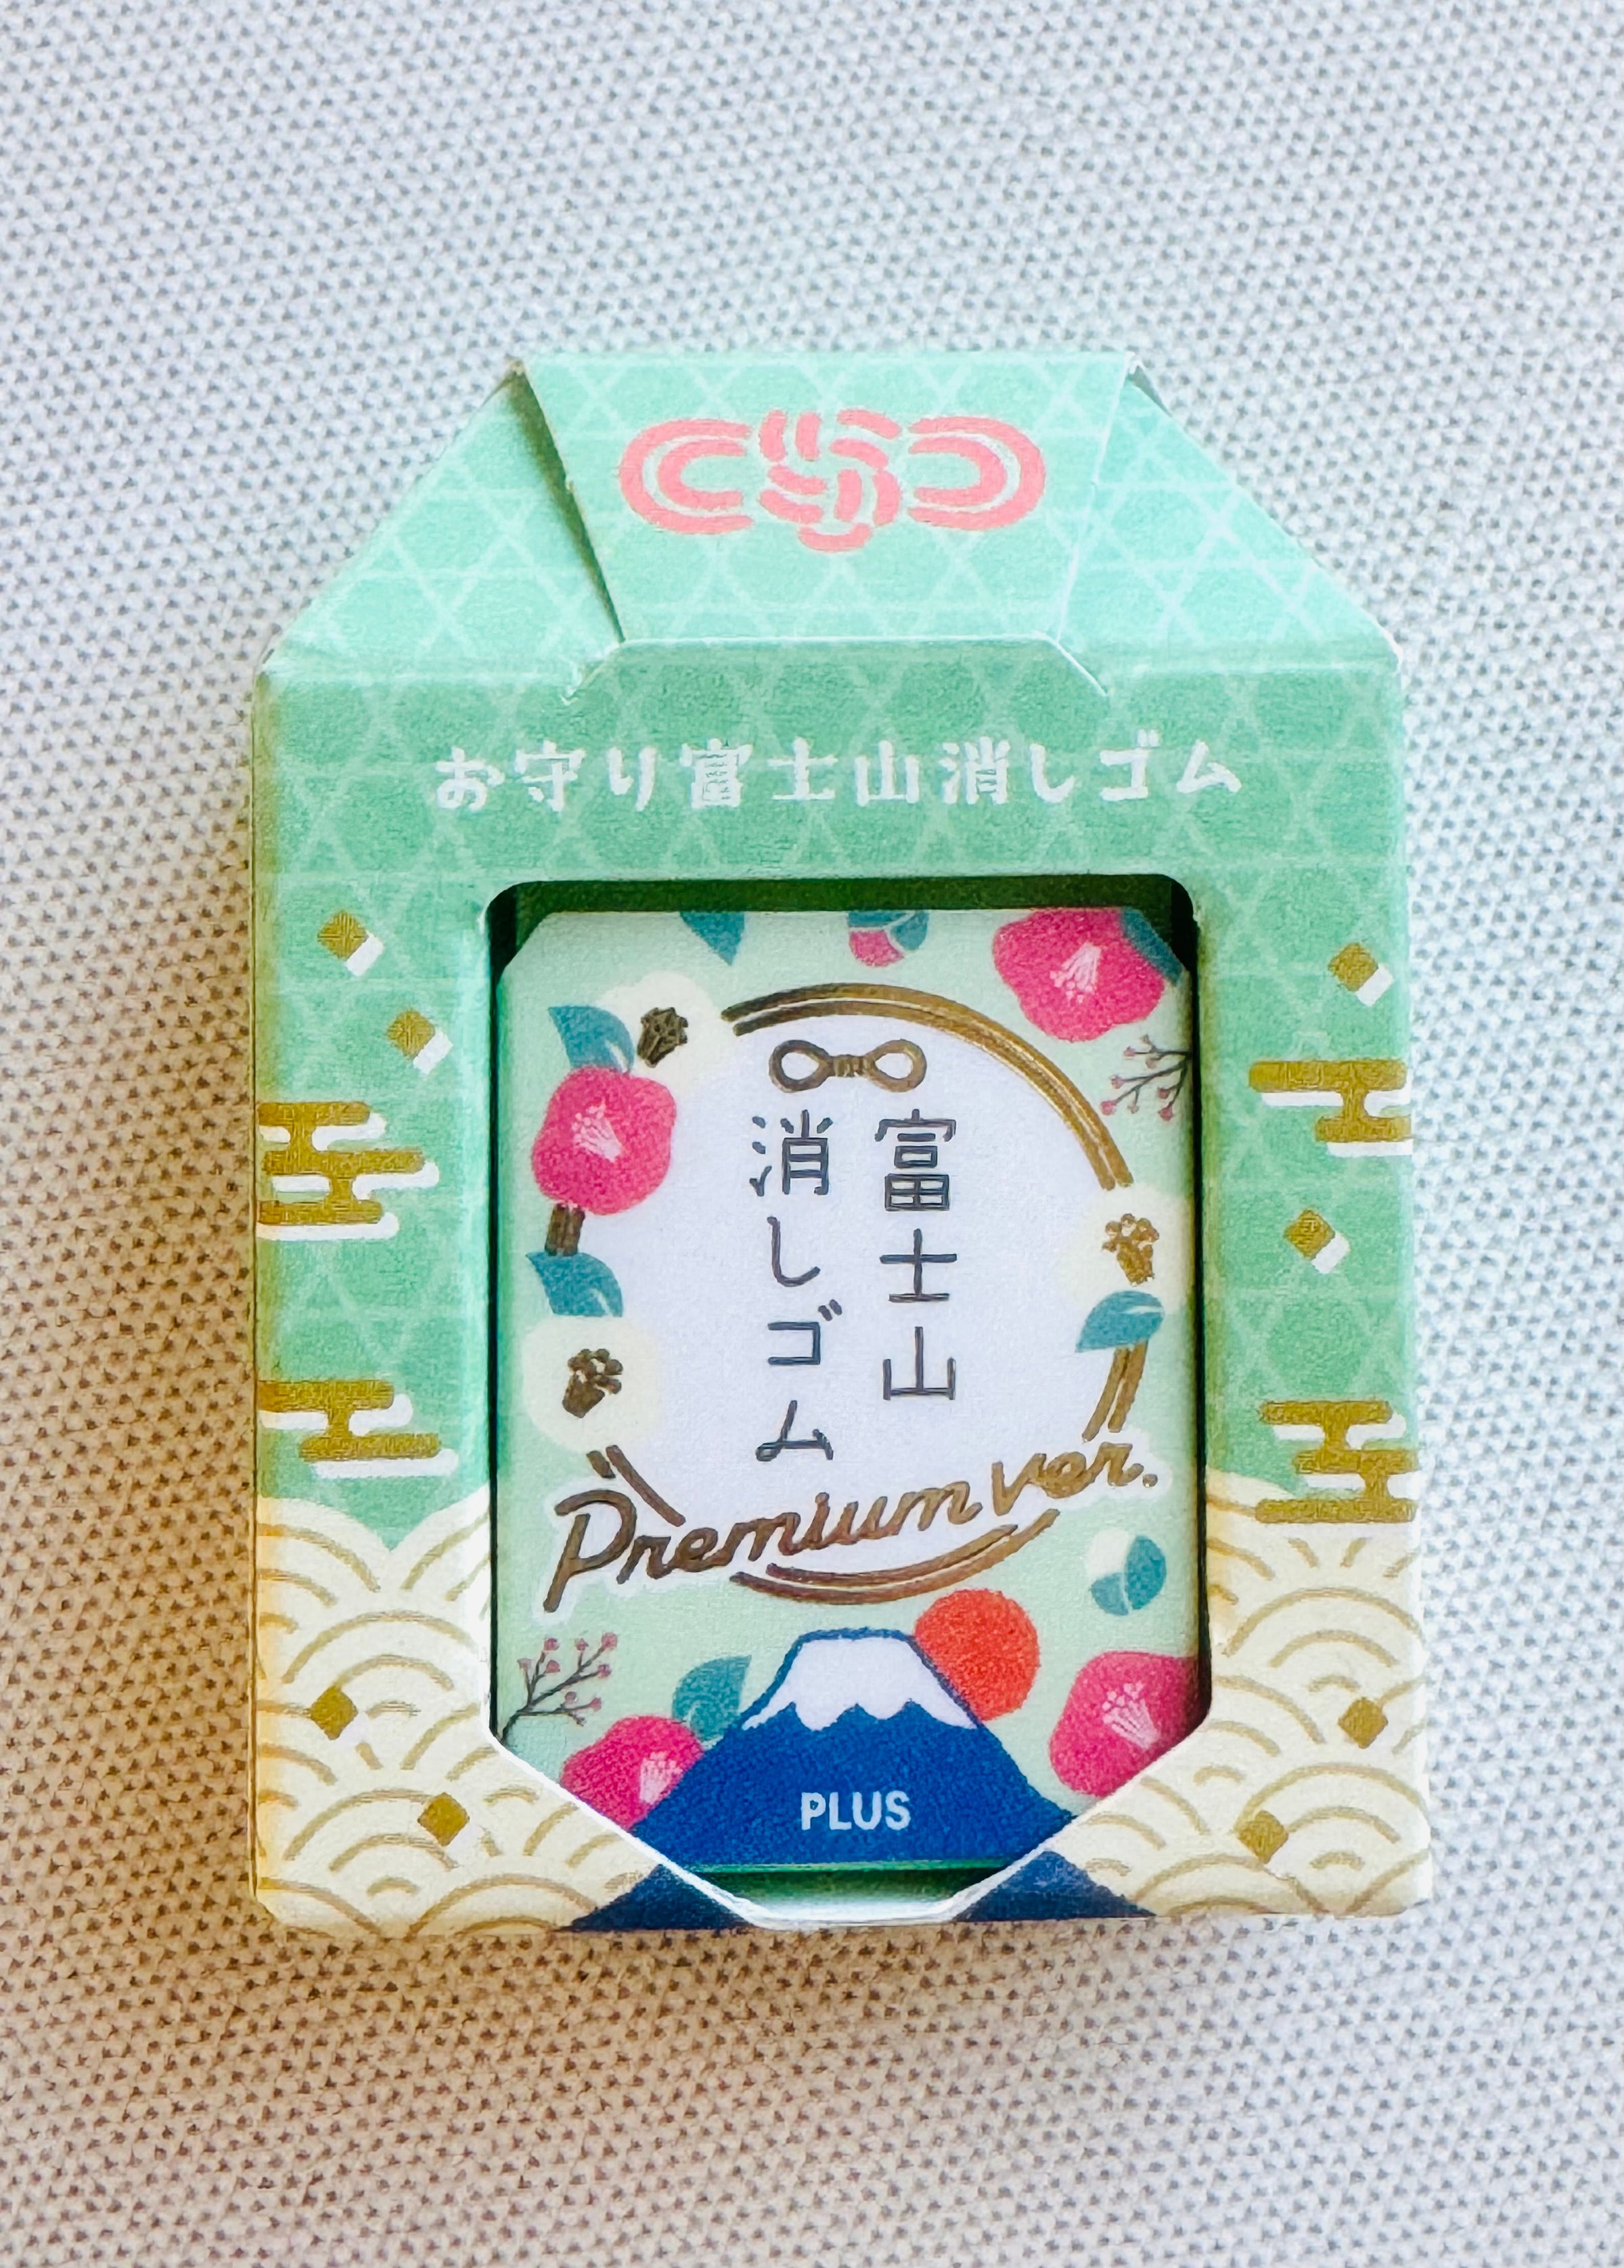 Plus Mt. Fuji Eraser Good Luck Premium Version (Limited Edition) - Wisteria